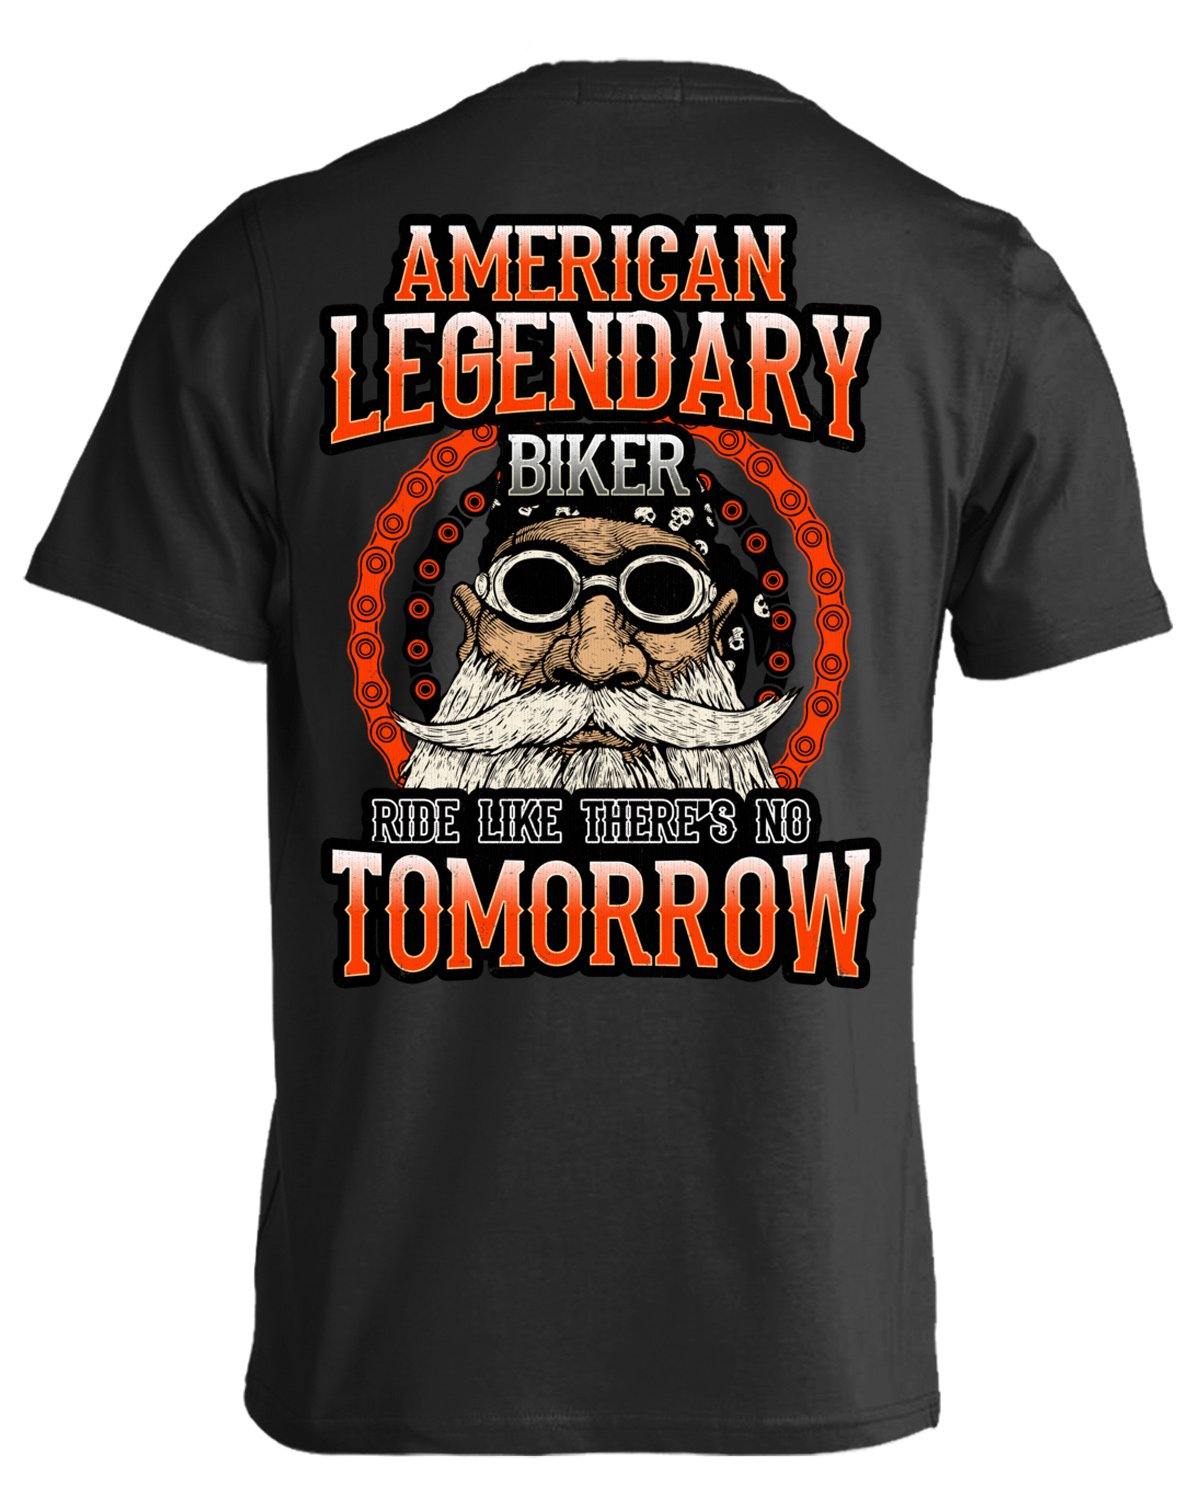 American Legendary Biker T-Shirt - American Legend Rider